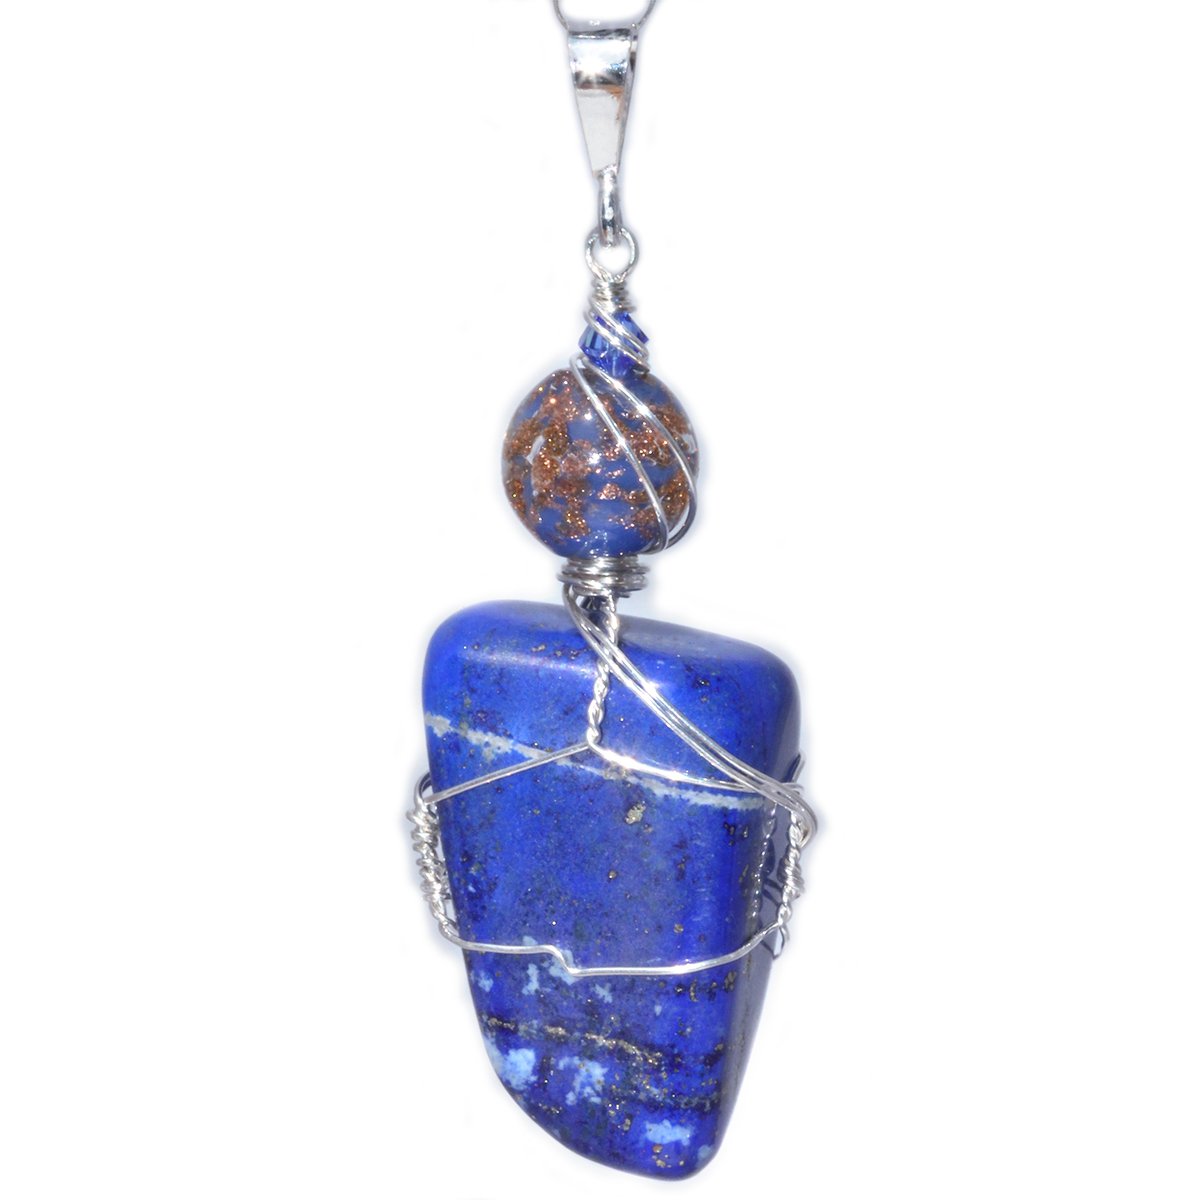 Lapis Lazuli Pendant with Venetian Glass Sommerso Aventurina Bead